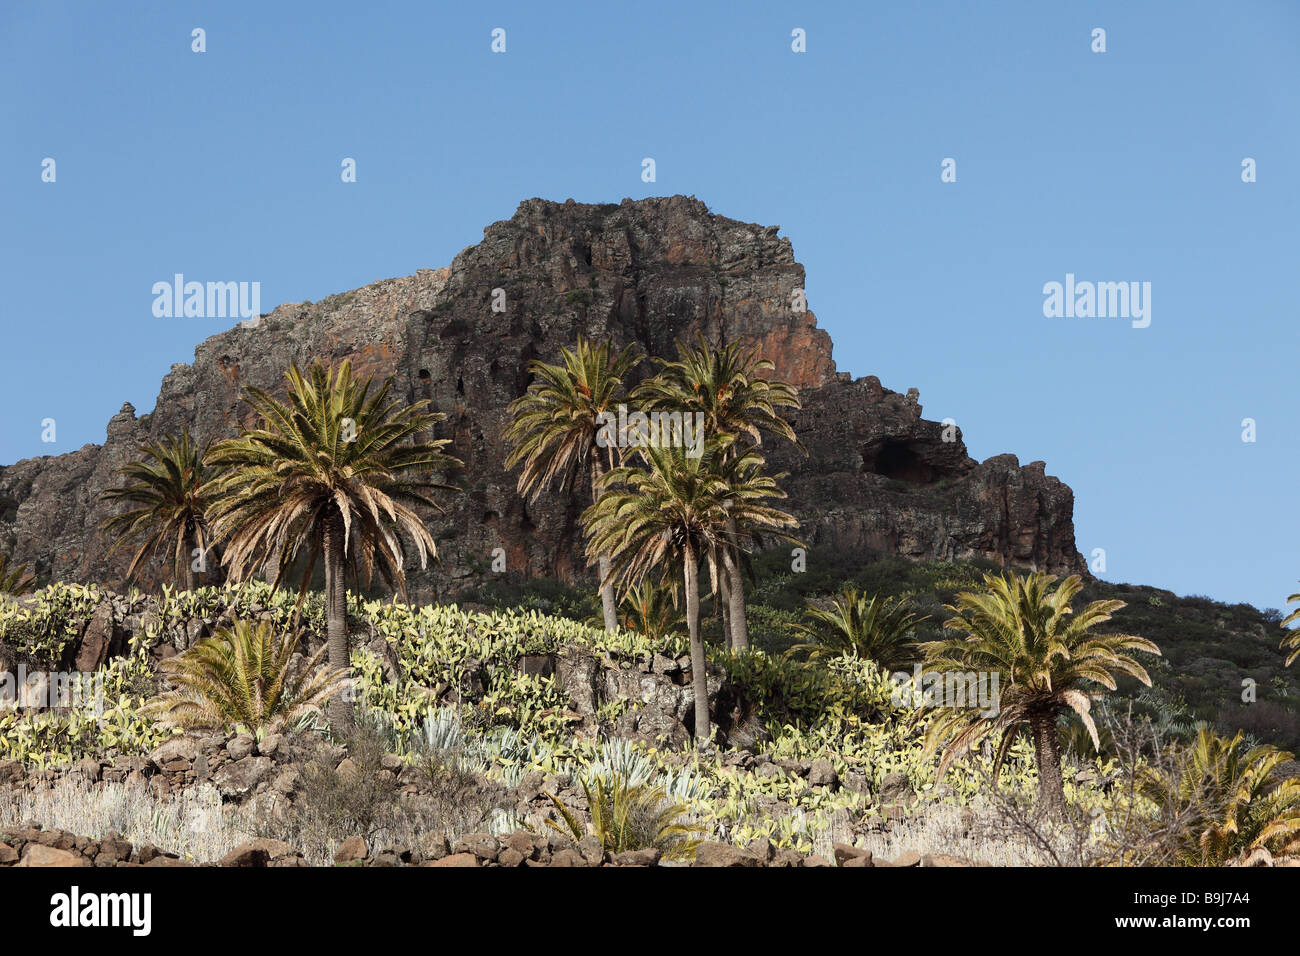 Canary Island Date Palms (Phoenix canariensis) and Mt Fortaleza near Chipude, La Gomera, Canary Islands, Spain, Europe Stock Photo